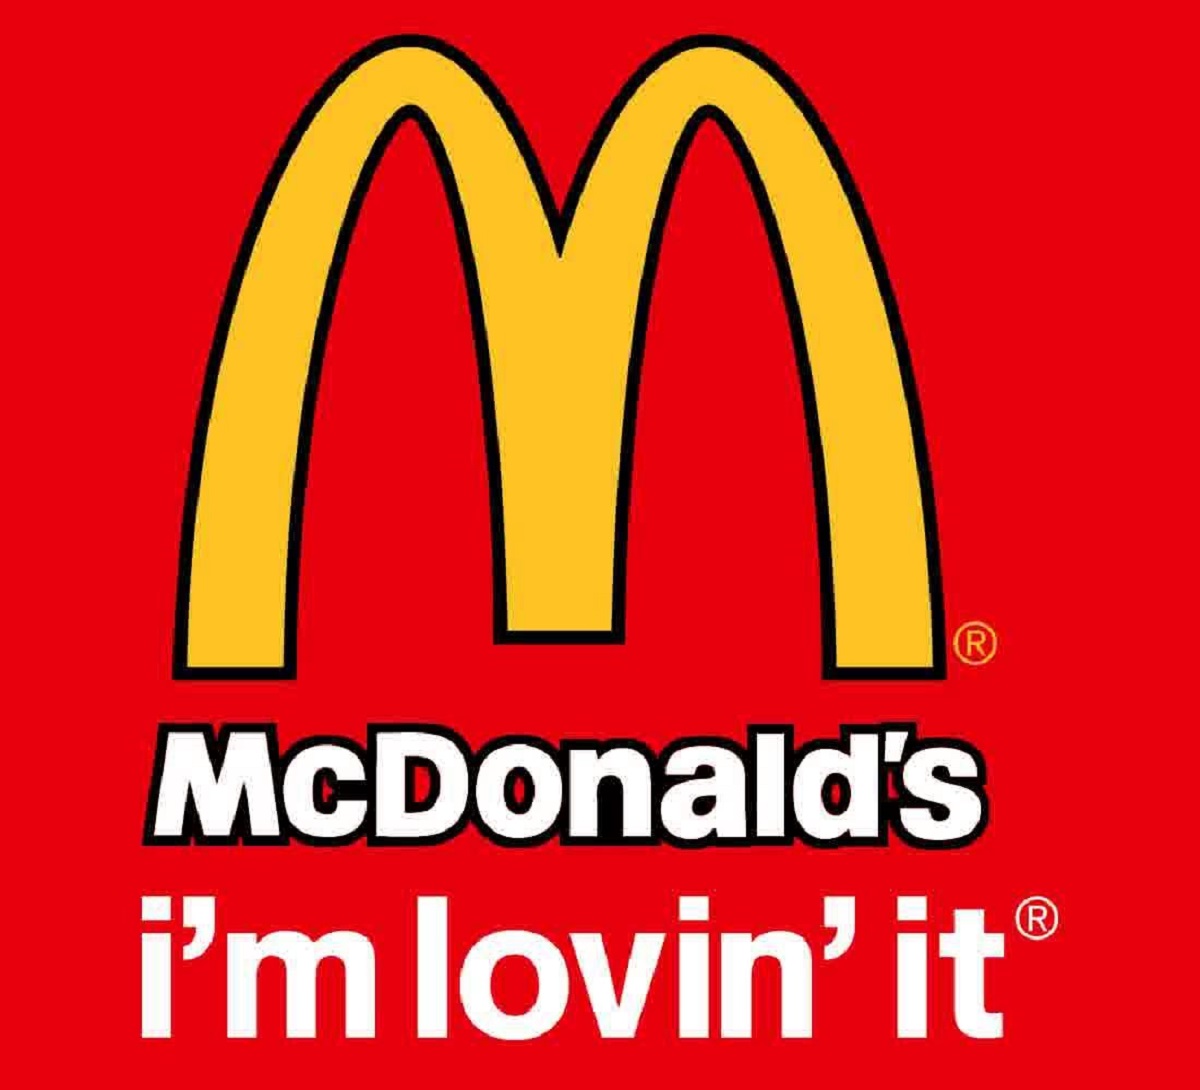 McDonalds tagline